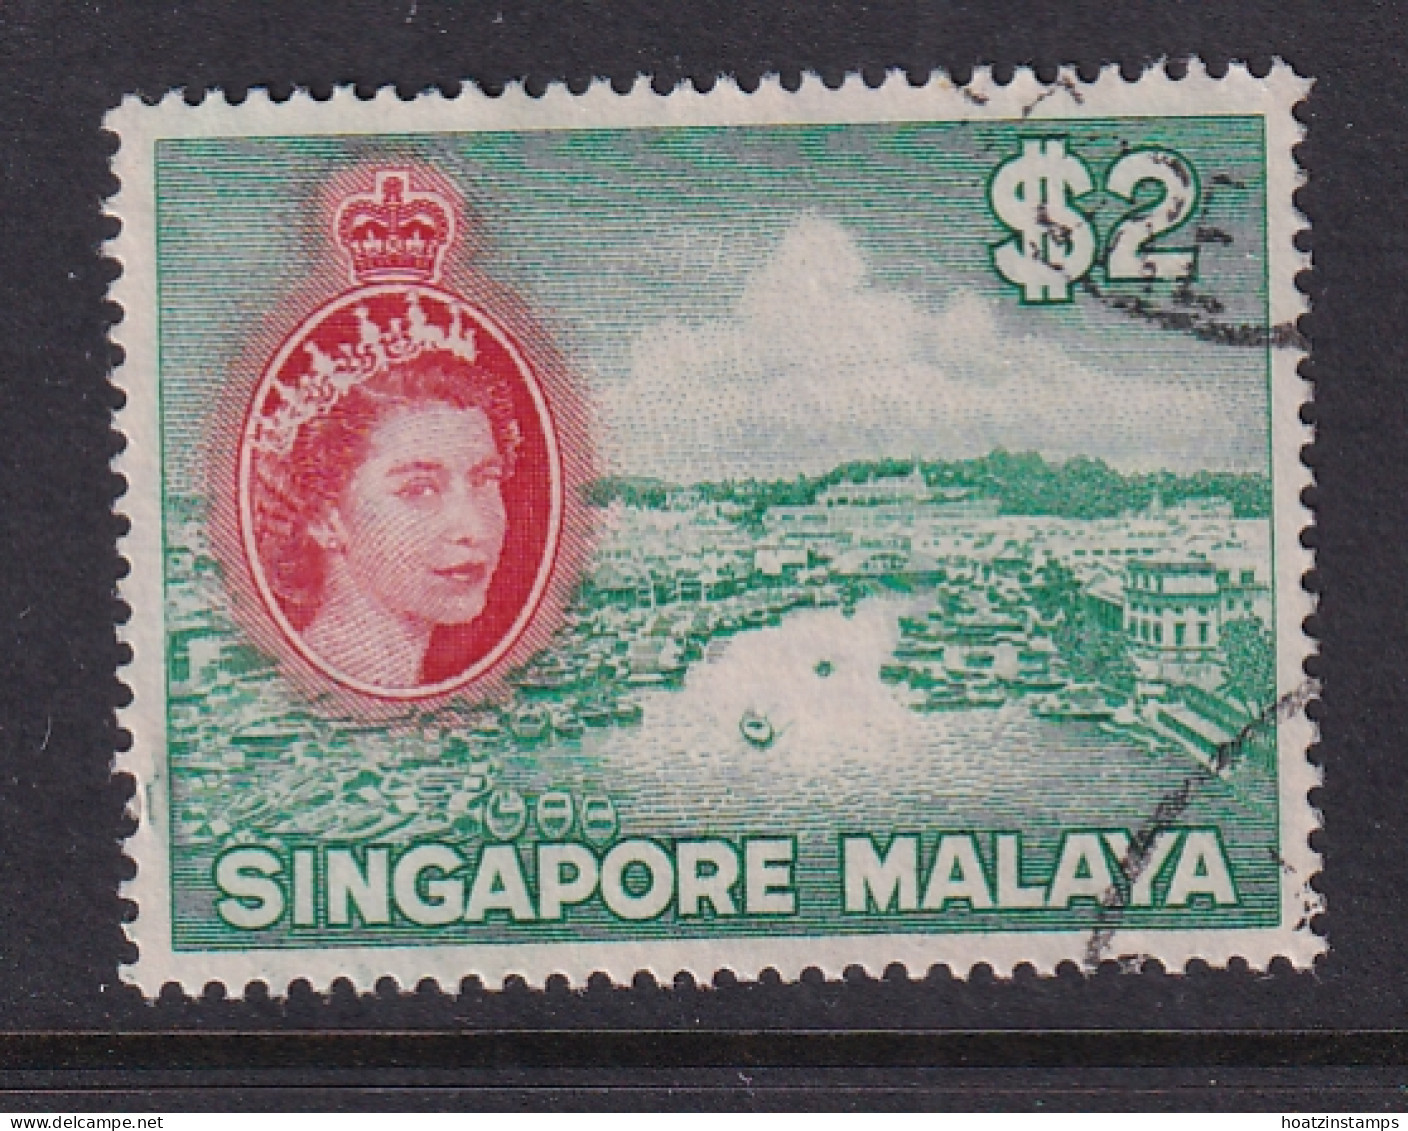 Singapore: 1955/59   QE II - Pictorial    SG51    $2    Used - Singapur (...-1959)